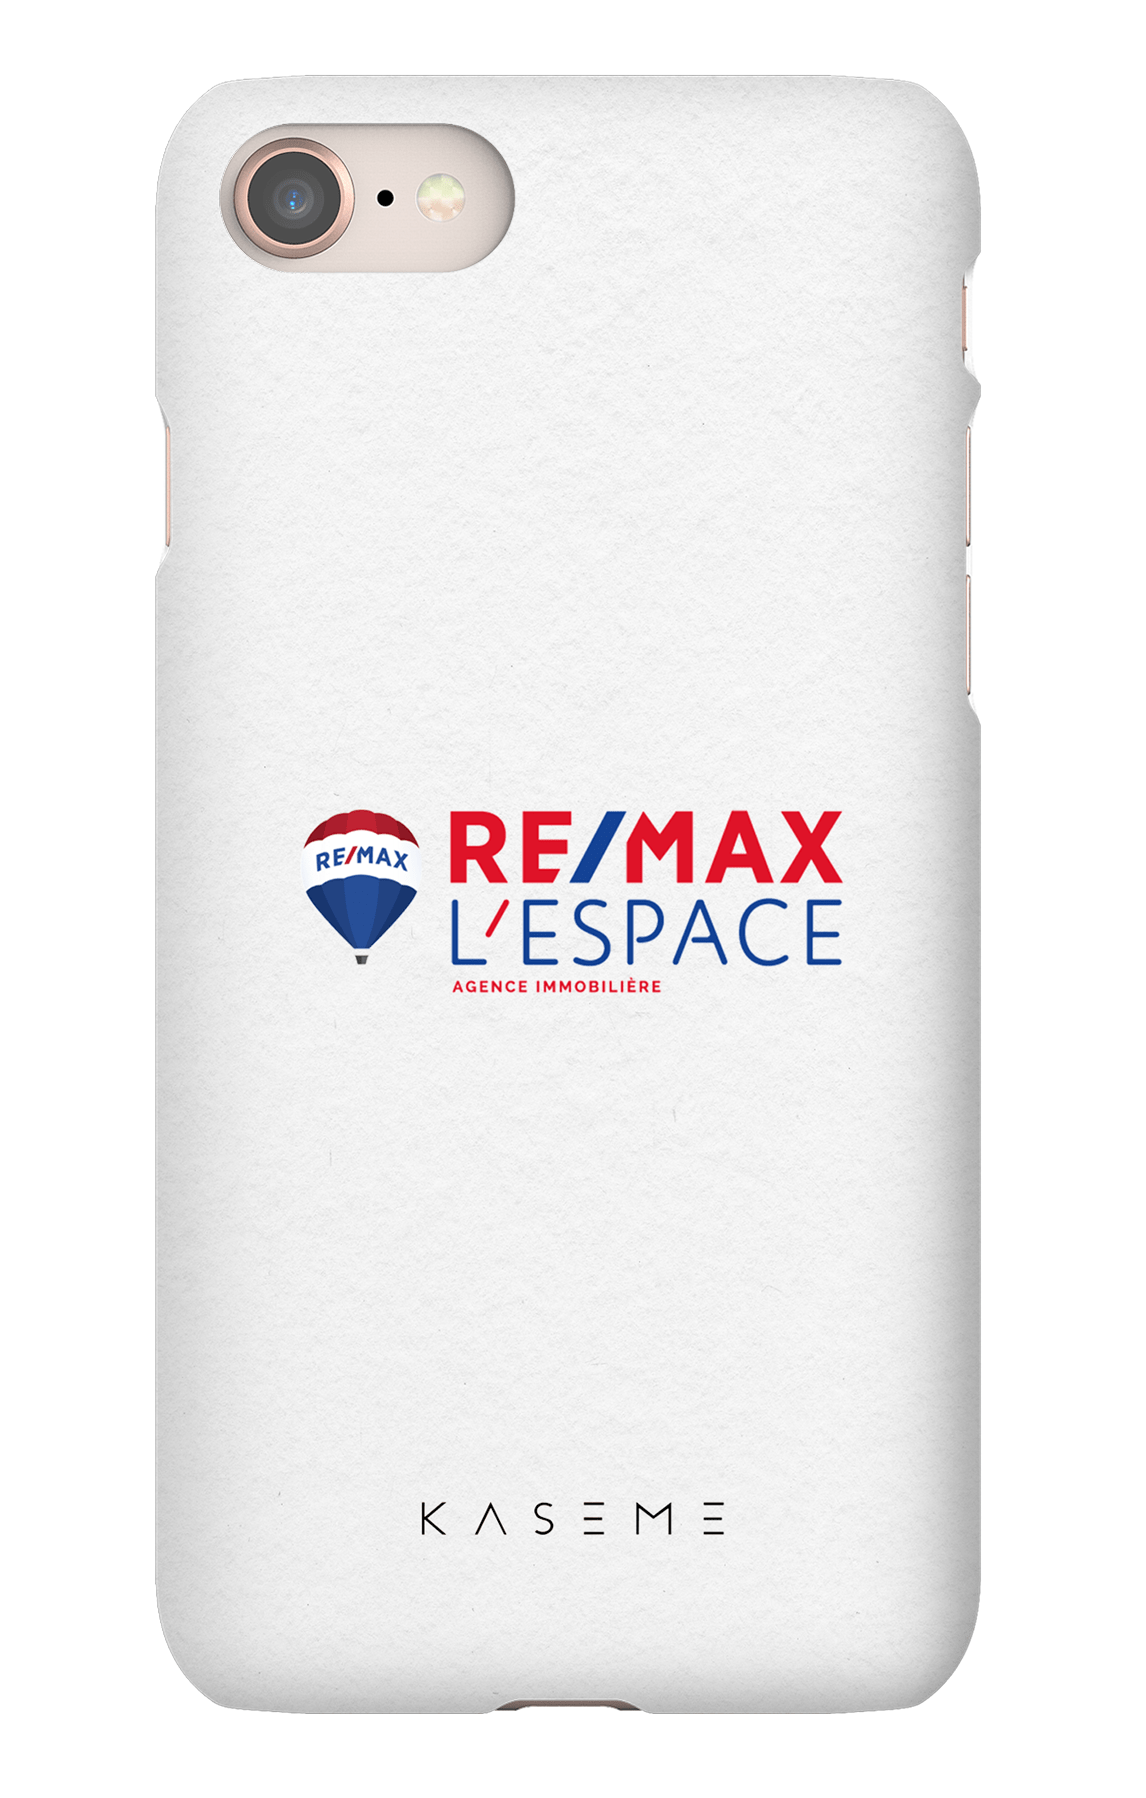 Remax L'Espace Blanc - iPhone SE 2020